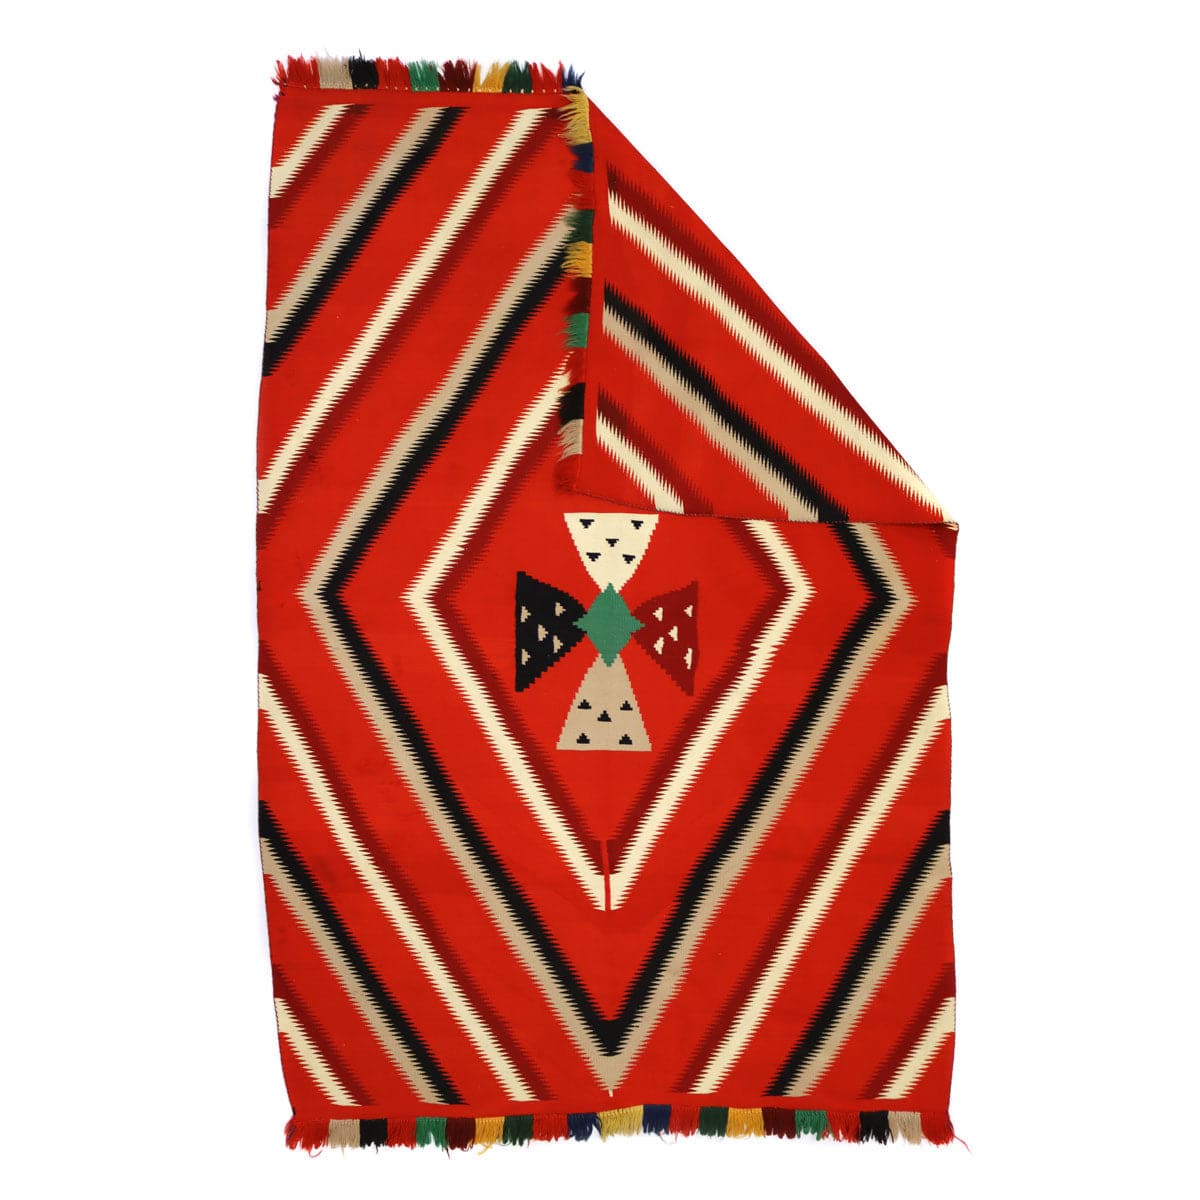 Navajo Germantown Blanket with Four Directions Cross Design c. 1890s, 84" x 60.5" (T92336-0821-003)1